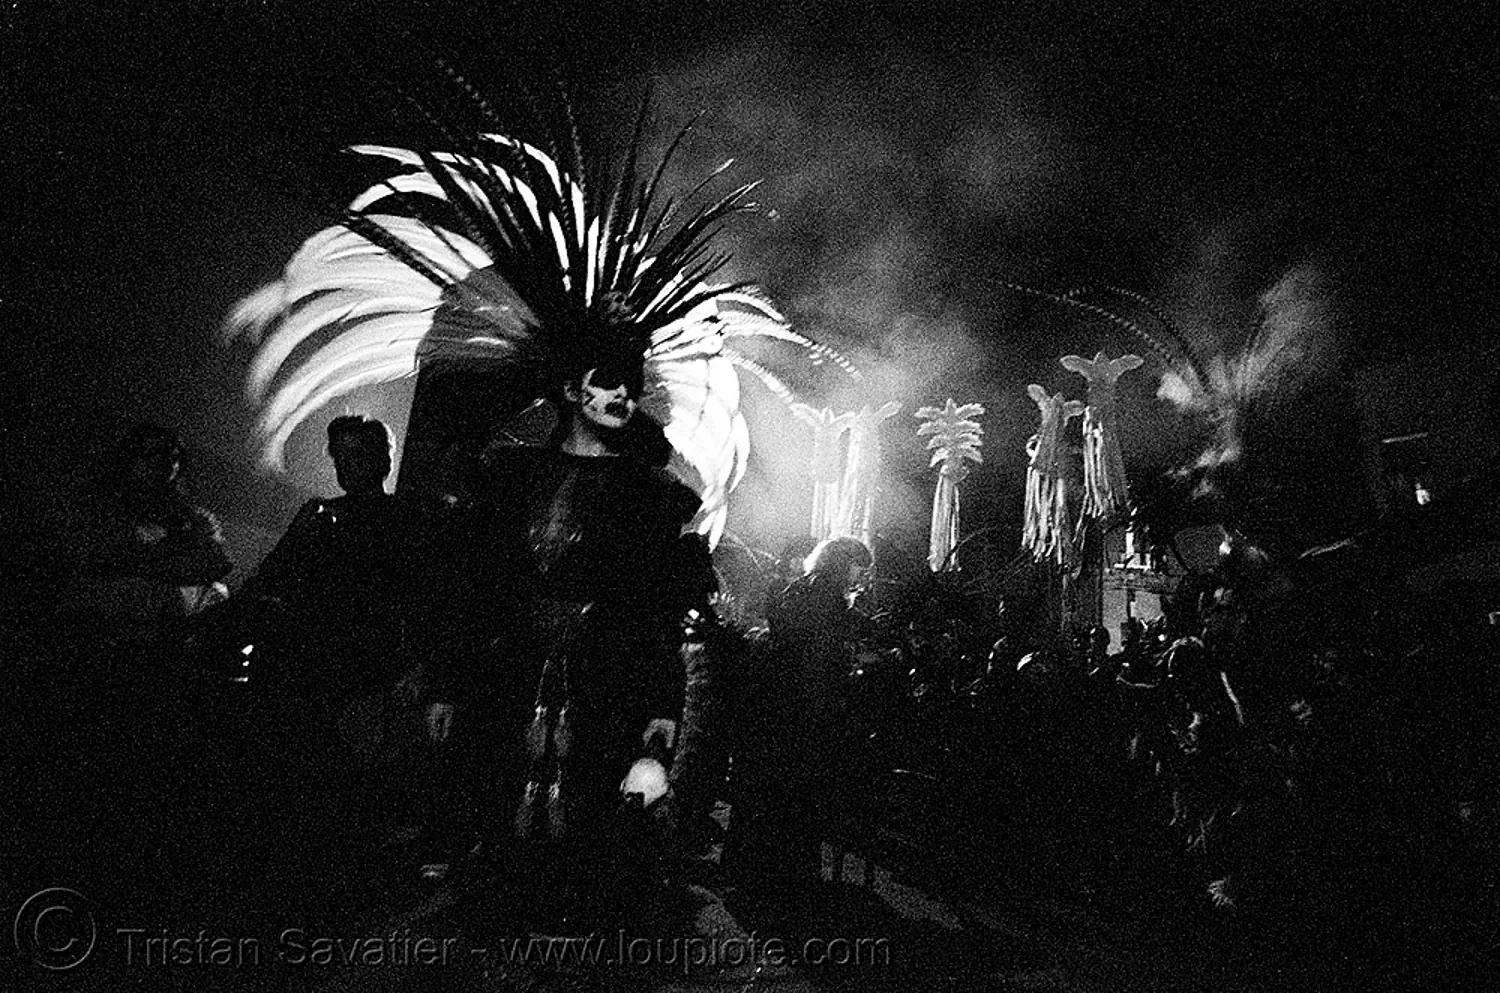 aztec dance group 'xolo, sacred dance' - dia de los muertos - halloween (san francisco) - teresa, aztec dancer, costumes, day of the dead, dia de los muertos, feathers, halloween, hat, makeup, night, p3200tmz, pushed, sacred dance, theresa, tmax, xolo